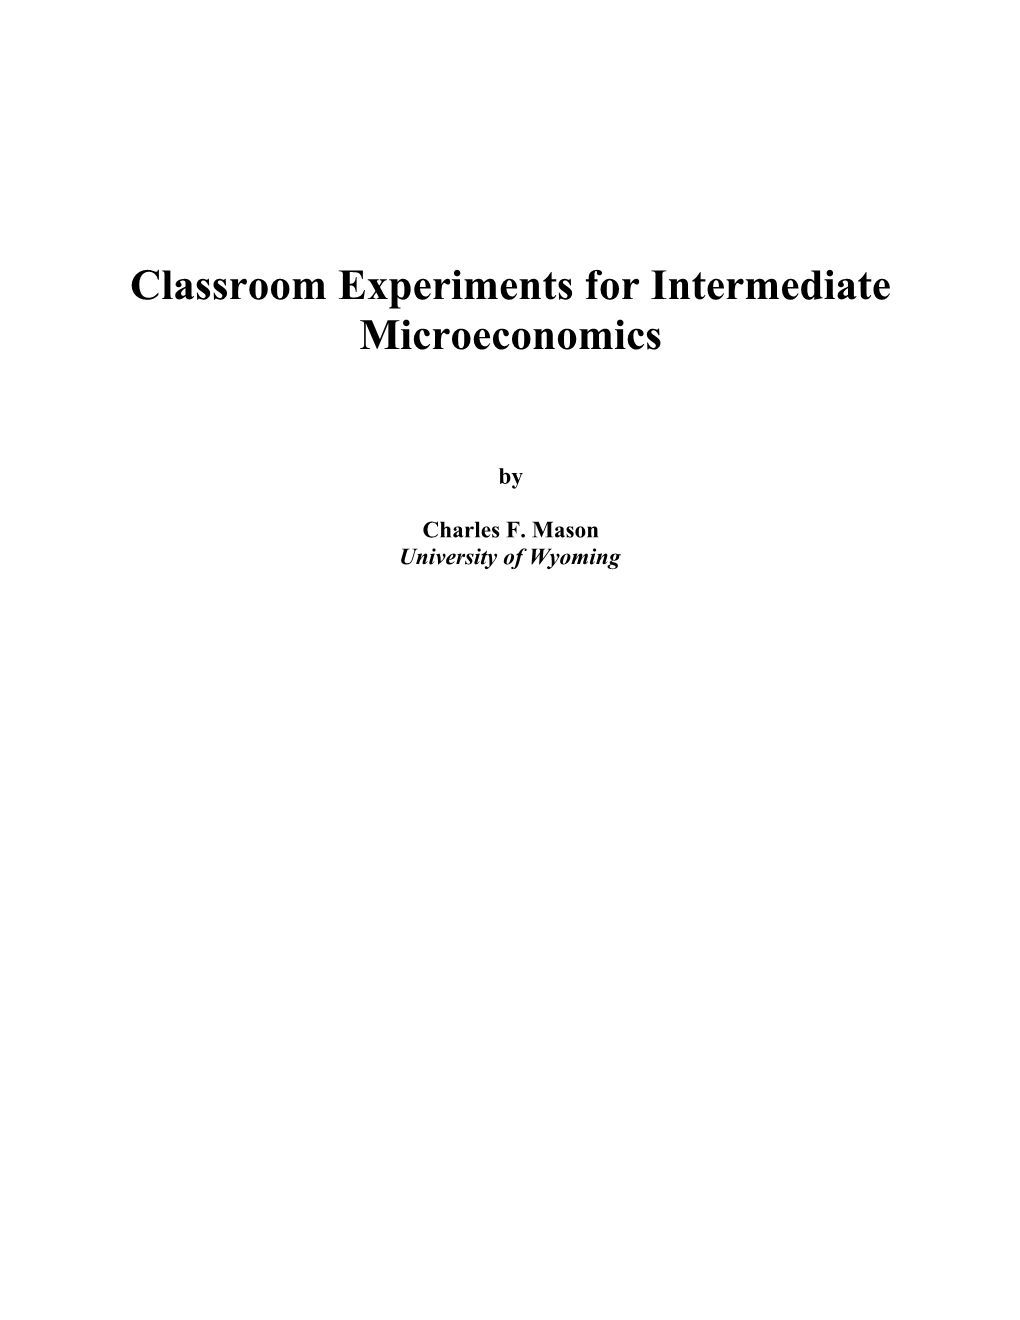 Classroom Experiments for Intermediate Microeconomics